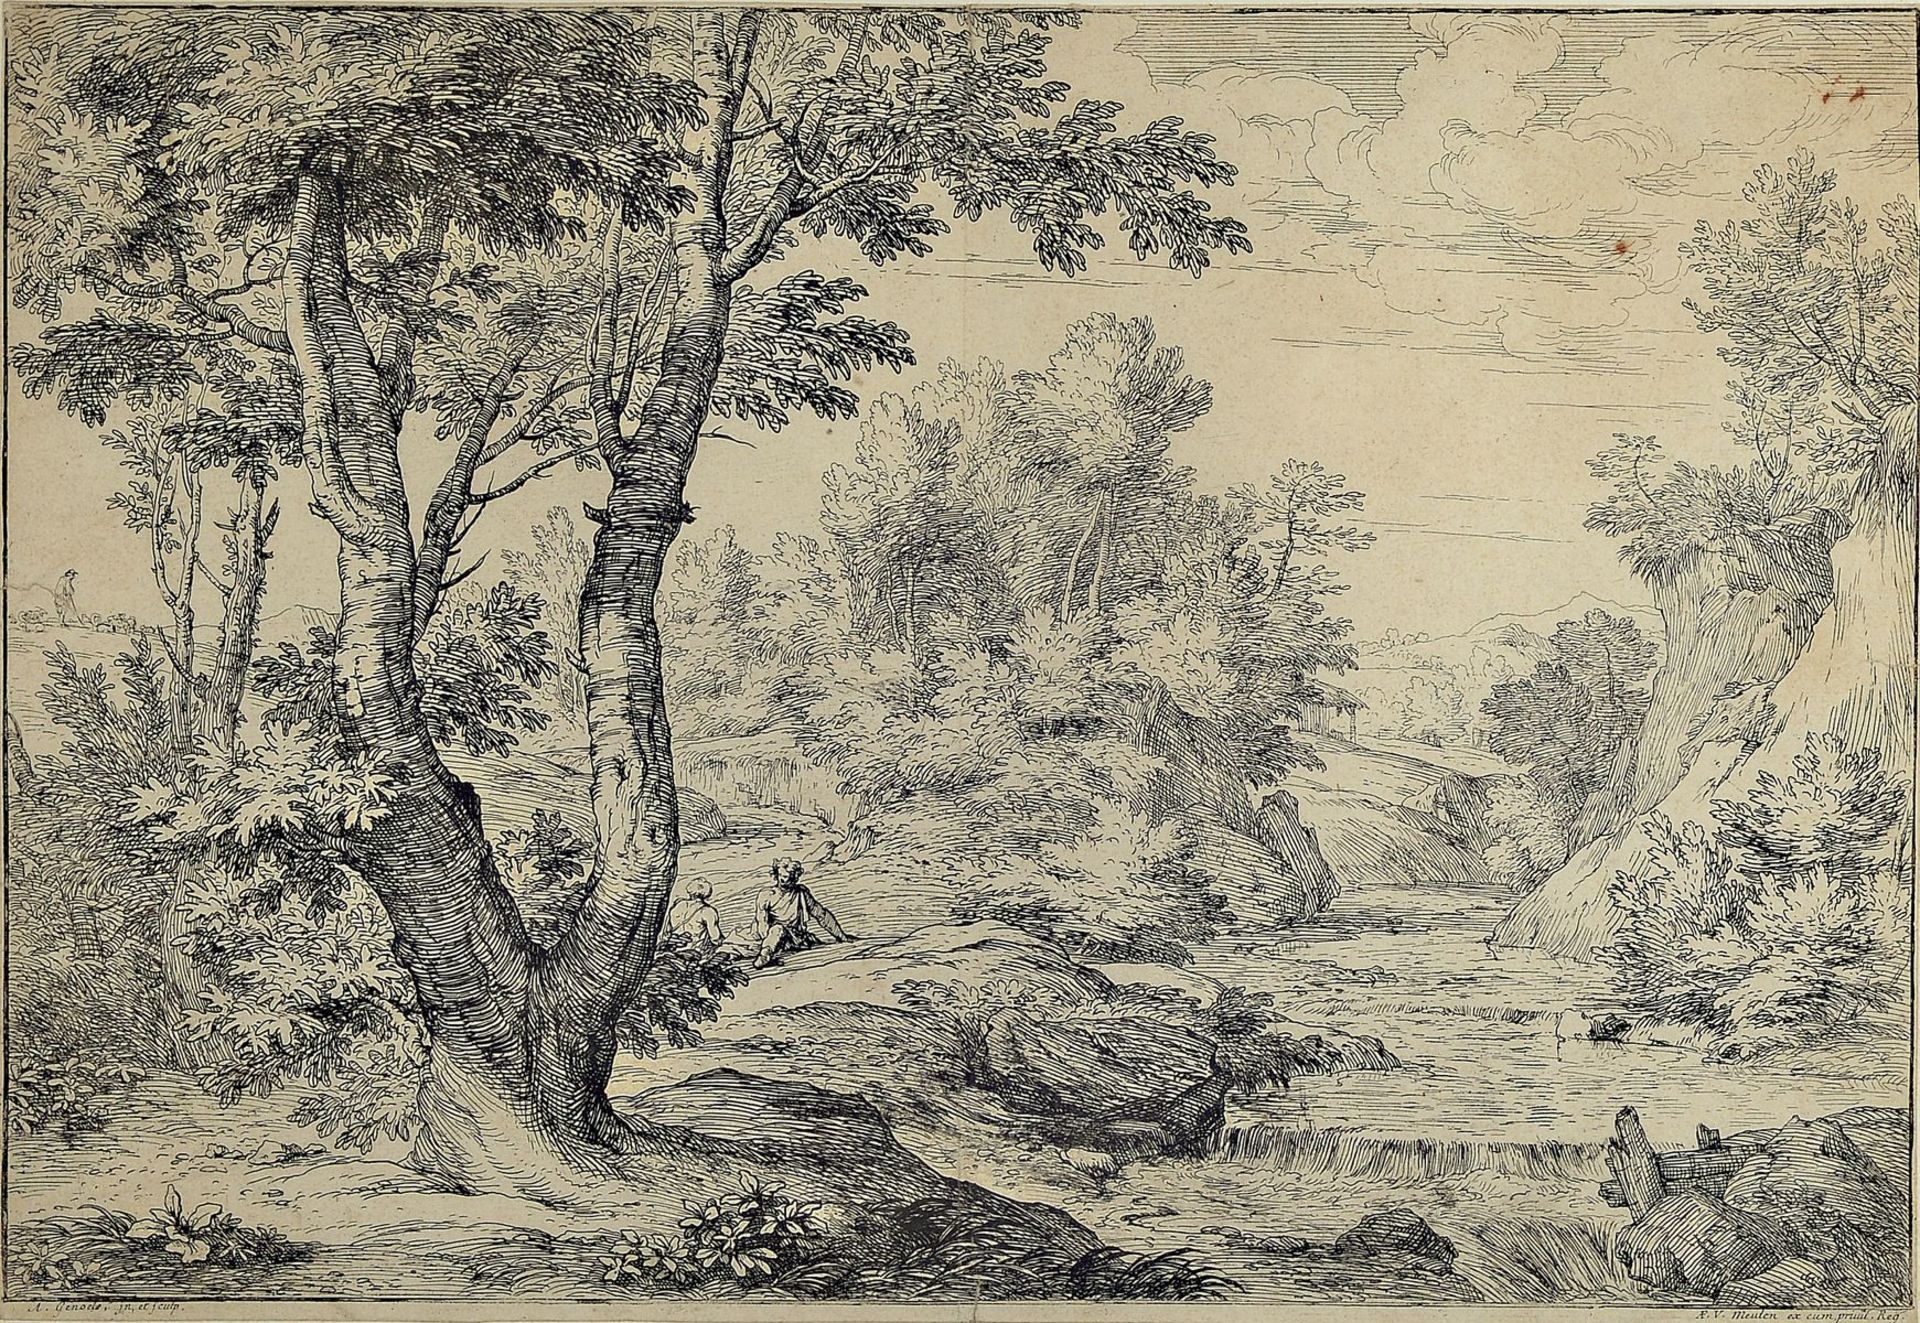 Abraham Genoels, 1640 - 1723, Les gros arbres a double